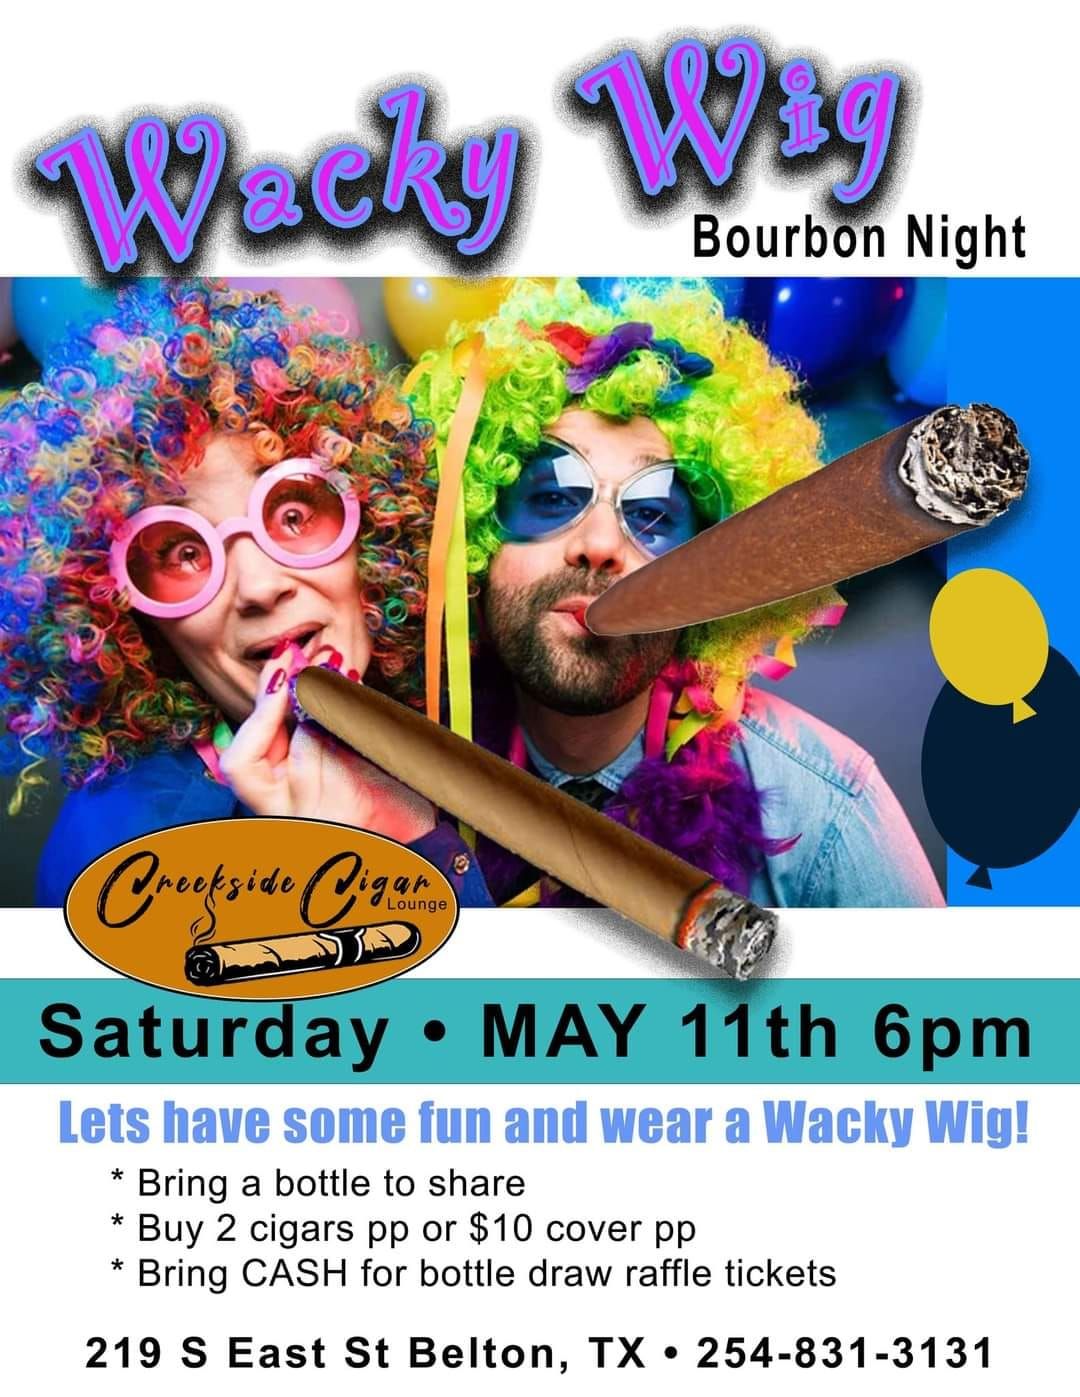 Whacky Wig Bourbon Night!!